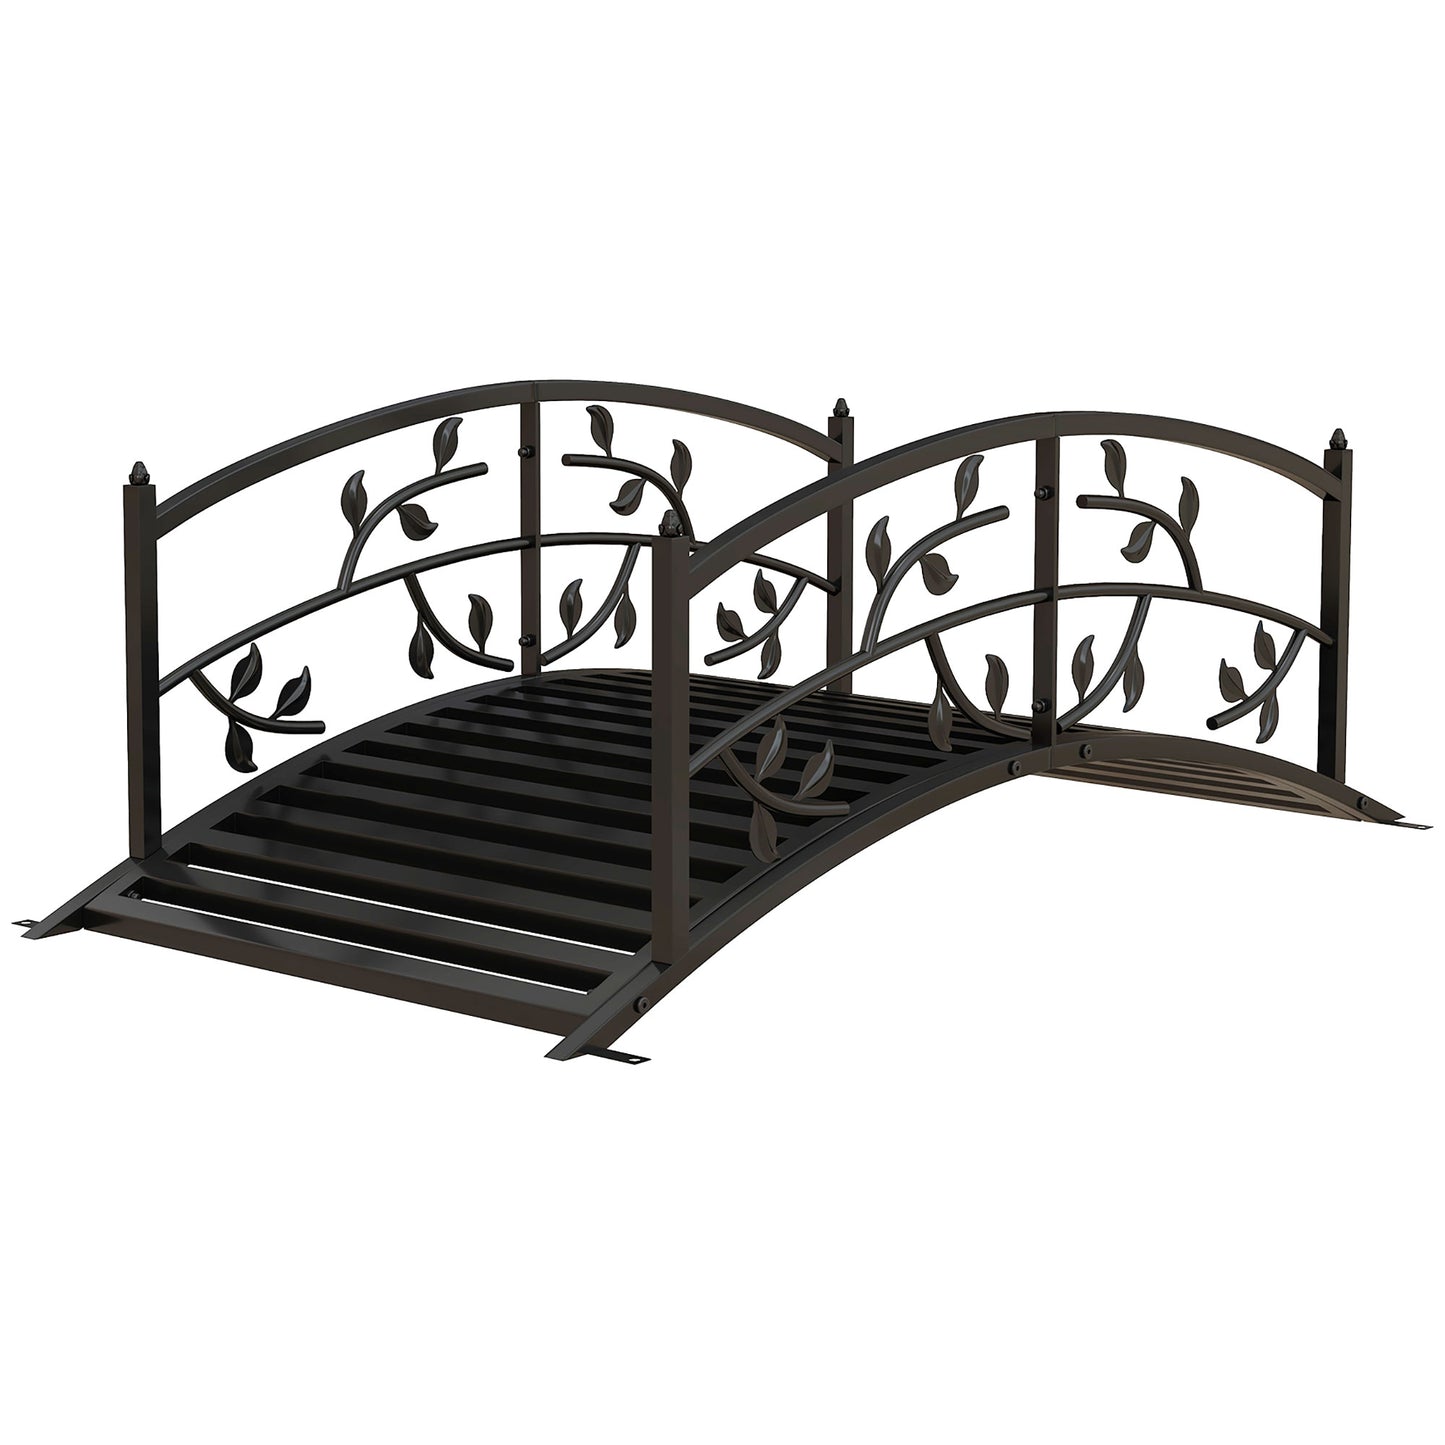 4' Metal Arch Garden Bridge Arc Footbridge with Guardrails and Decorative Vine Pattern, Black at Gallery Canada